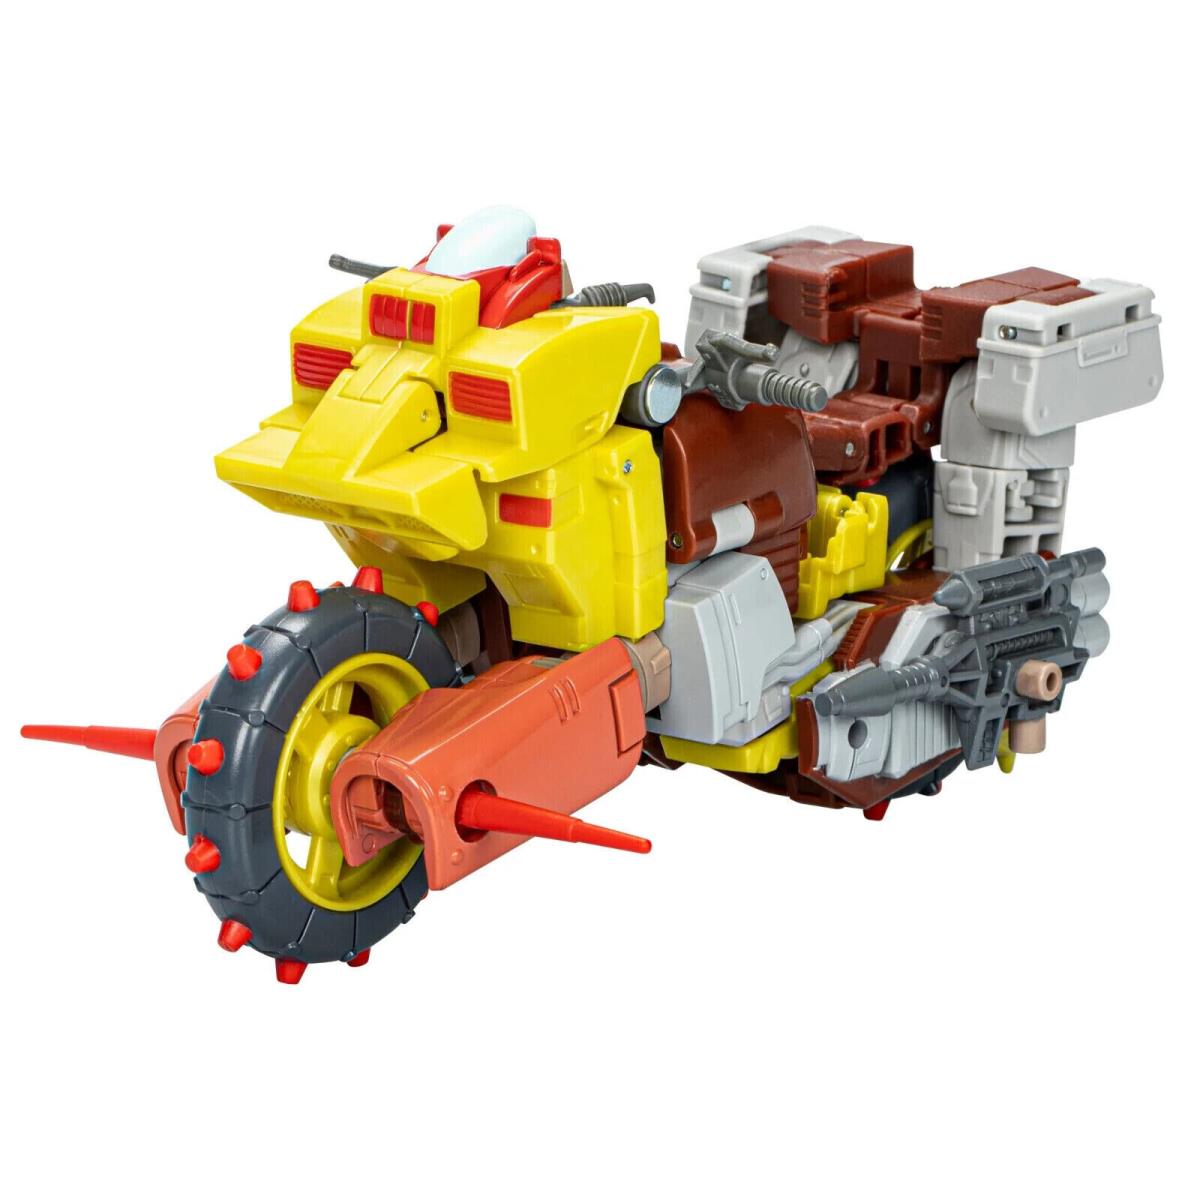 Transformers Studio Voyagertransformers: The Movie Junkion Scrapheap Figure